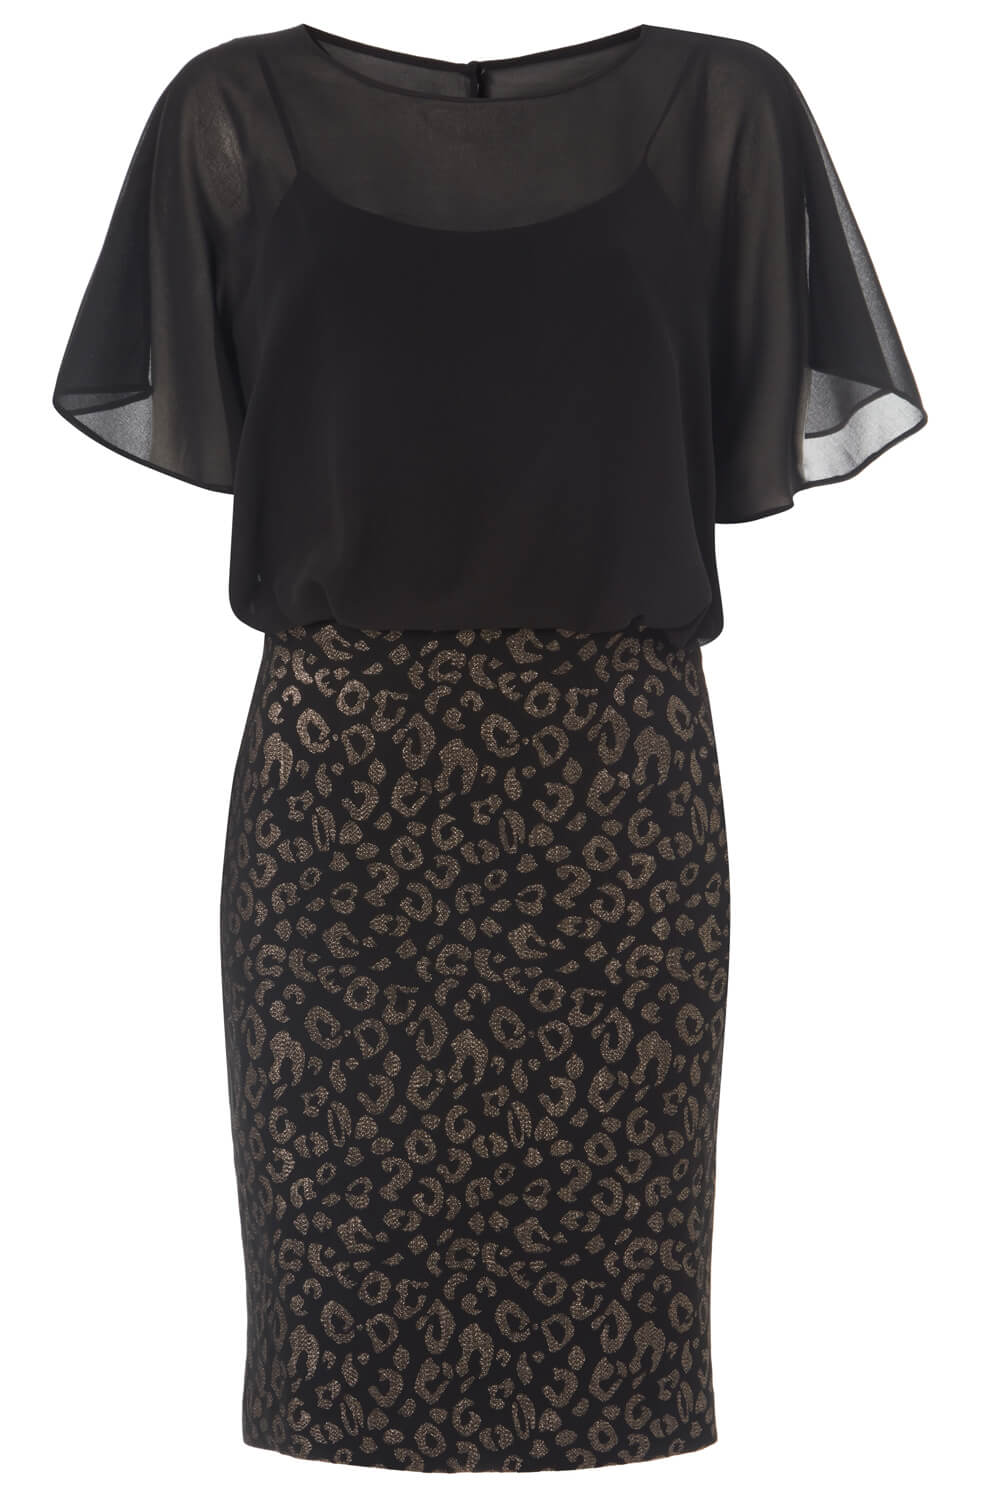 Black Chiffon Overlay Animal Print Dress, Image 5 of 5